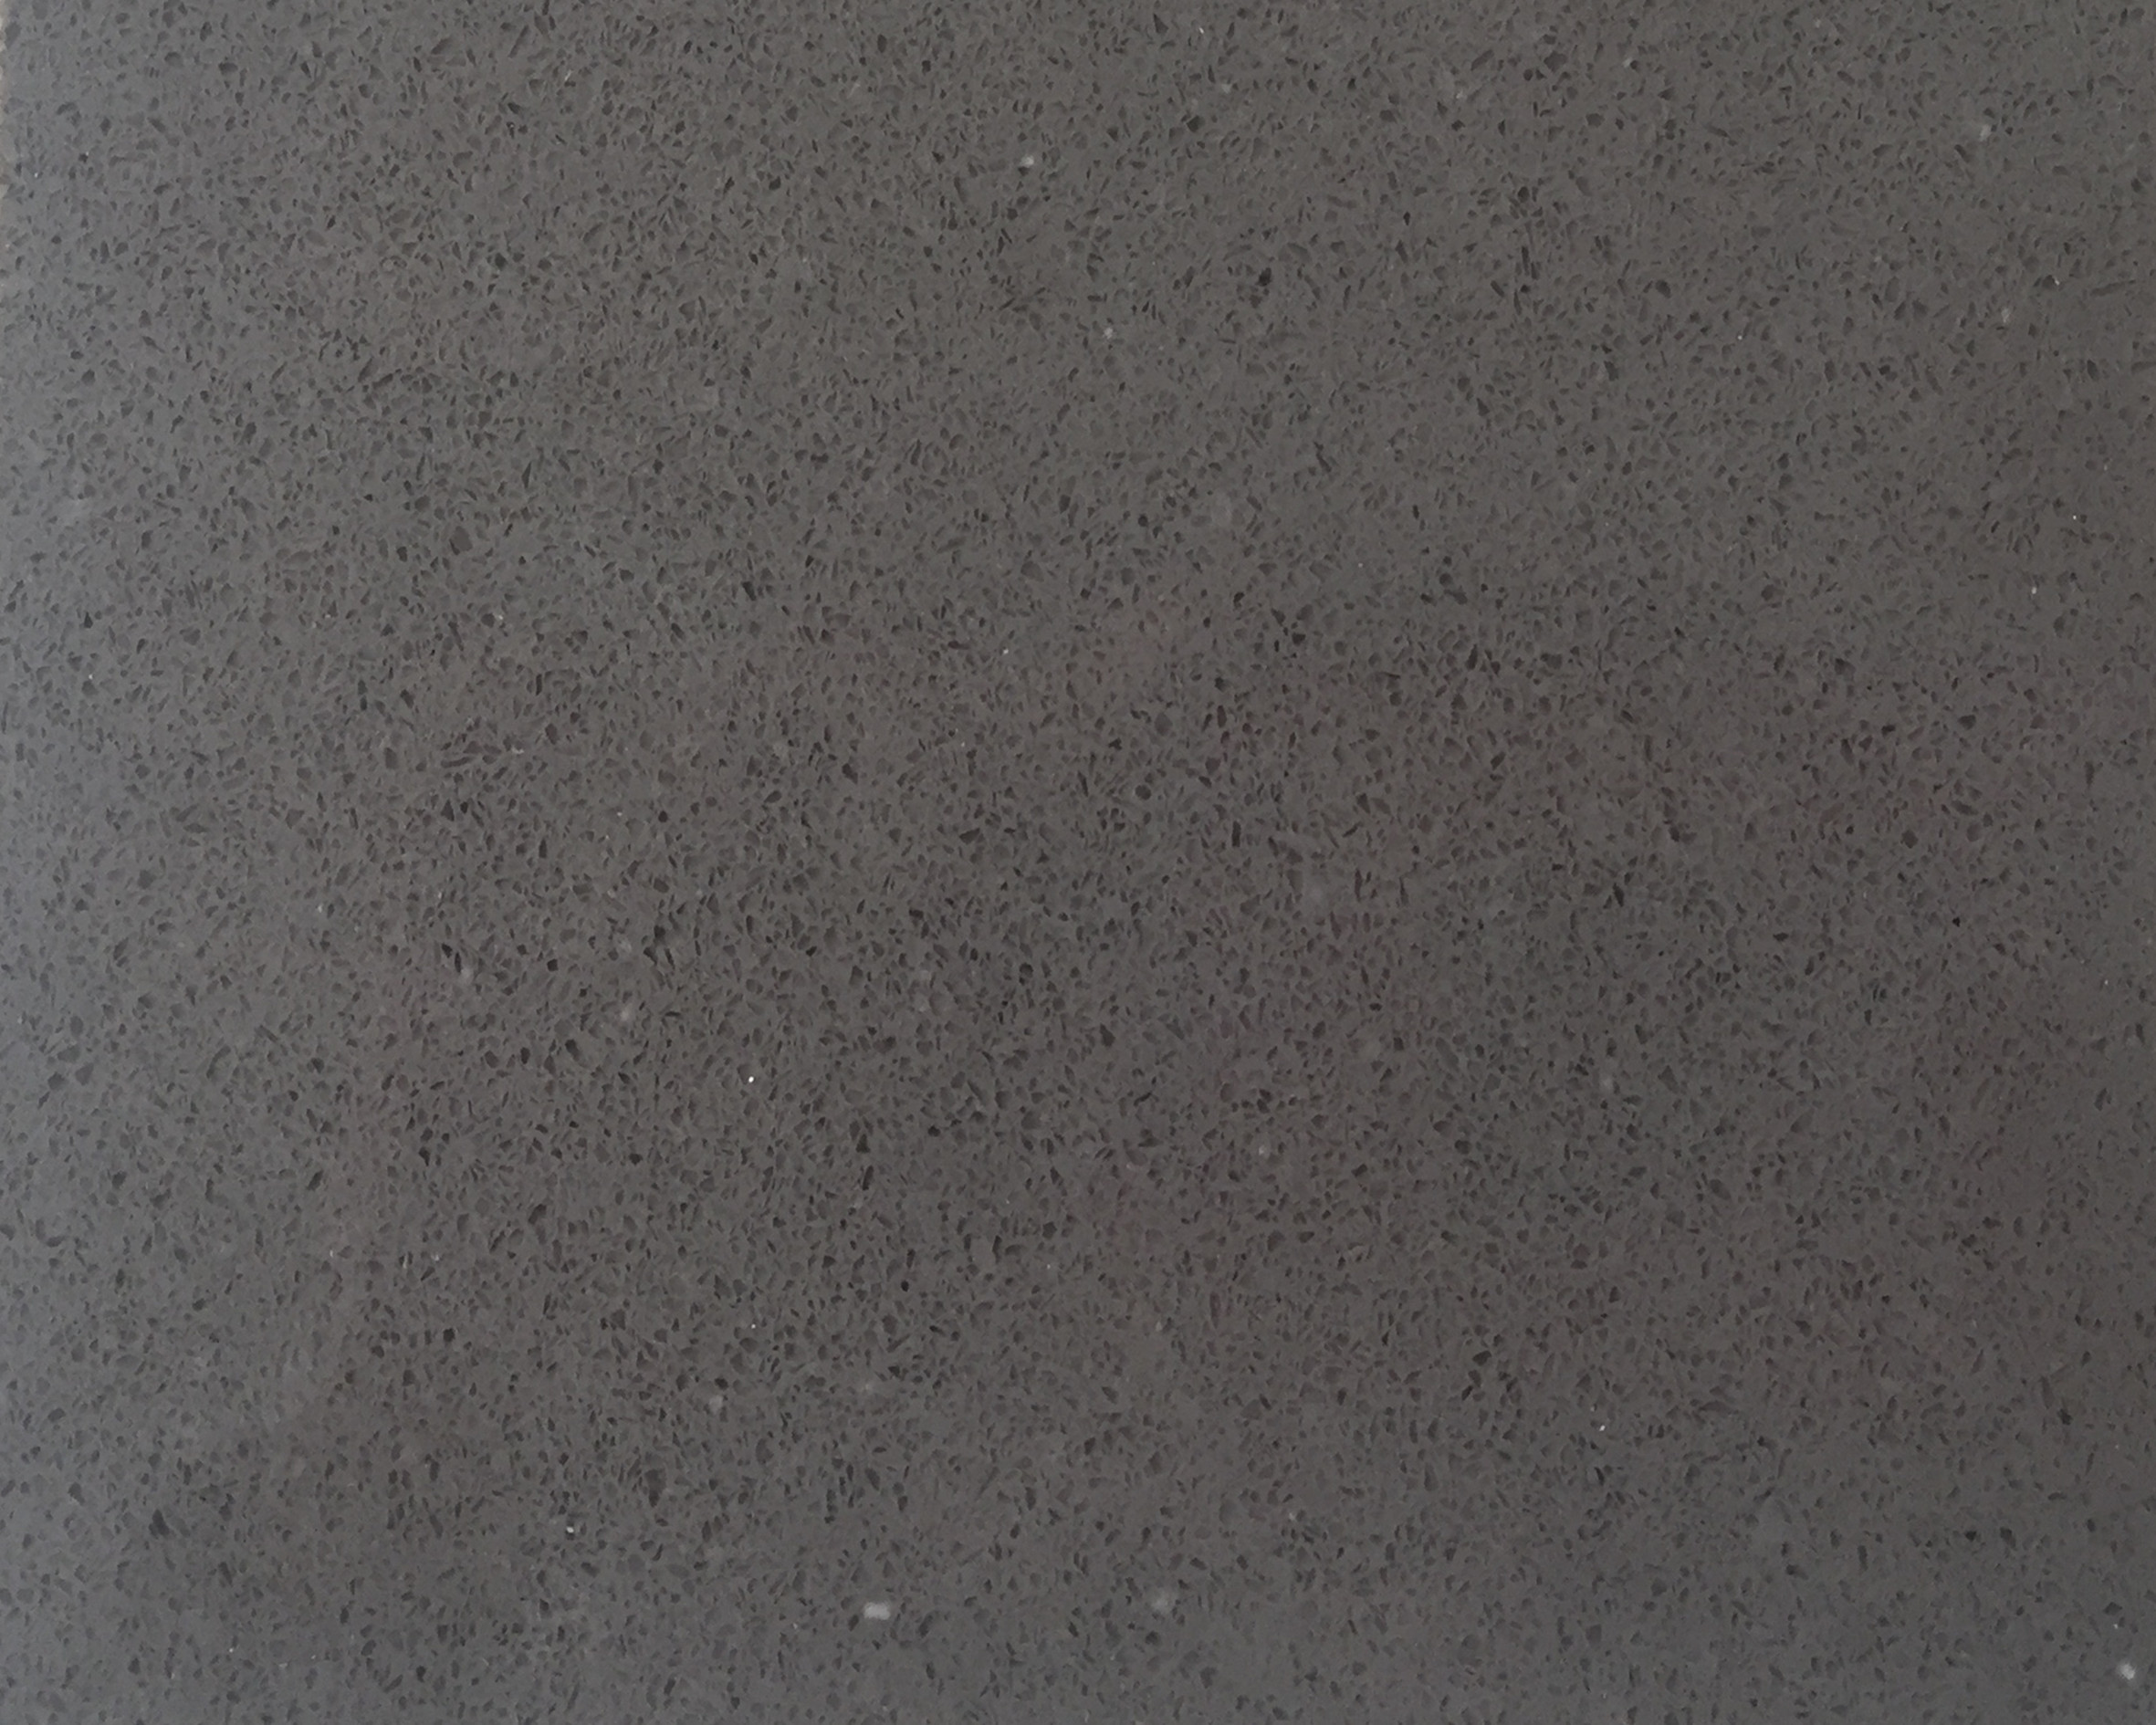 DL-12310 Classical Dark Grey Quartz Slab Counter Top 